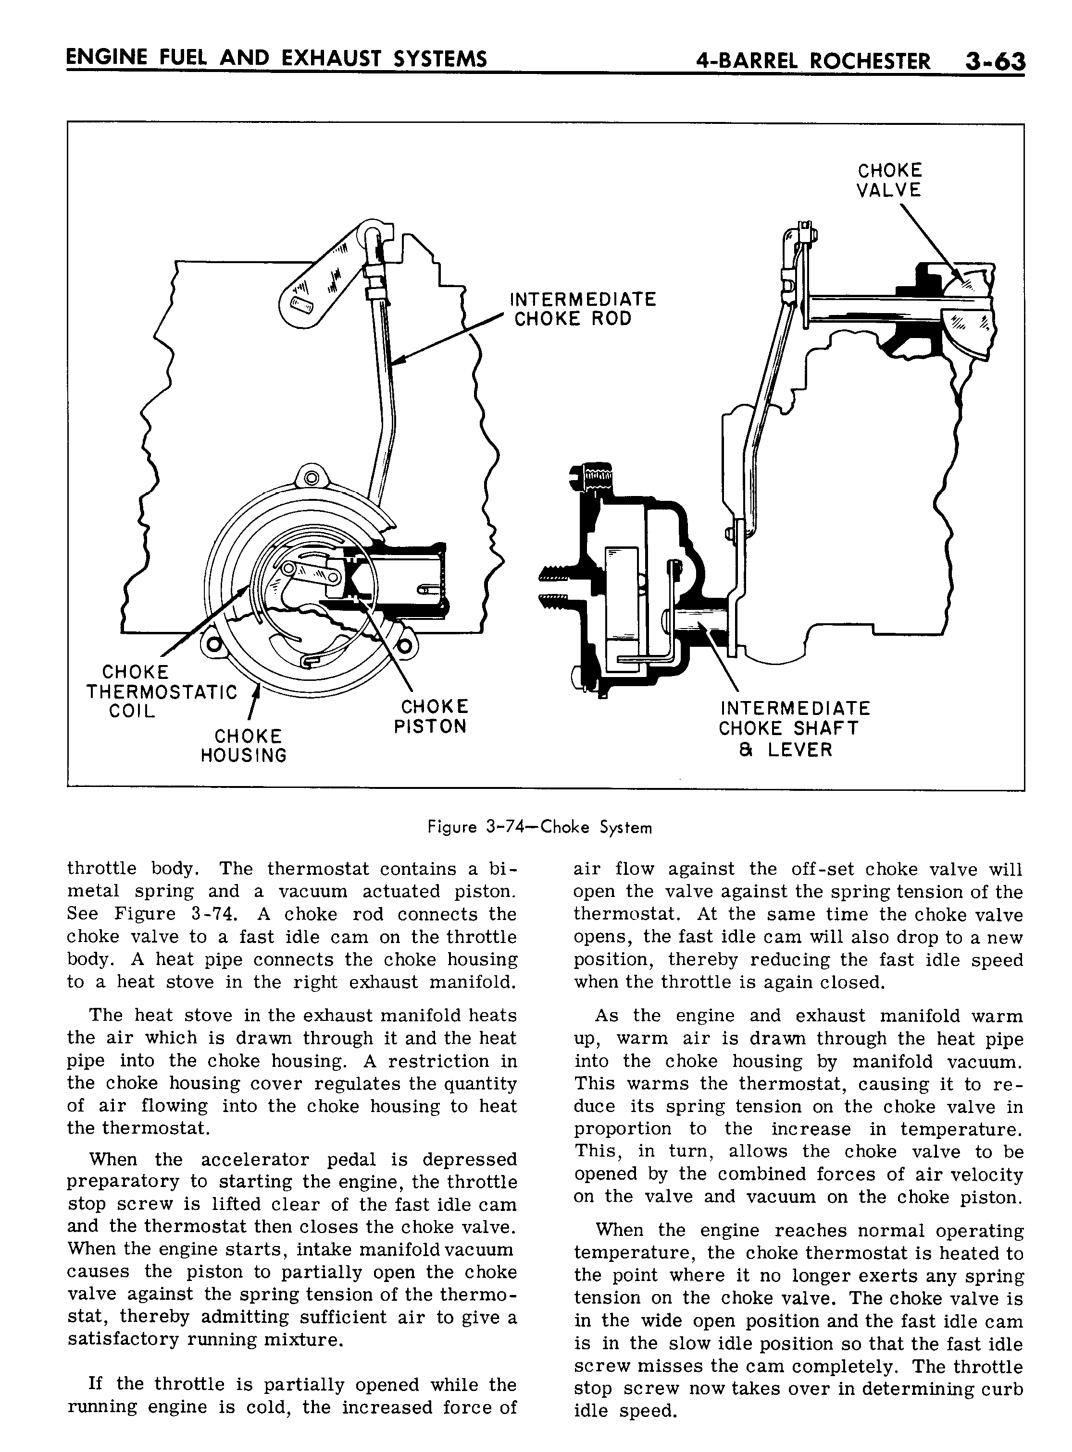 n_04 1961 Buick Shop Manual - Engine Fuel & Exhaust-063-063.jpg